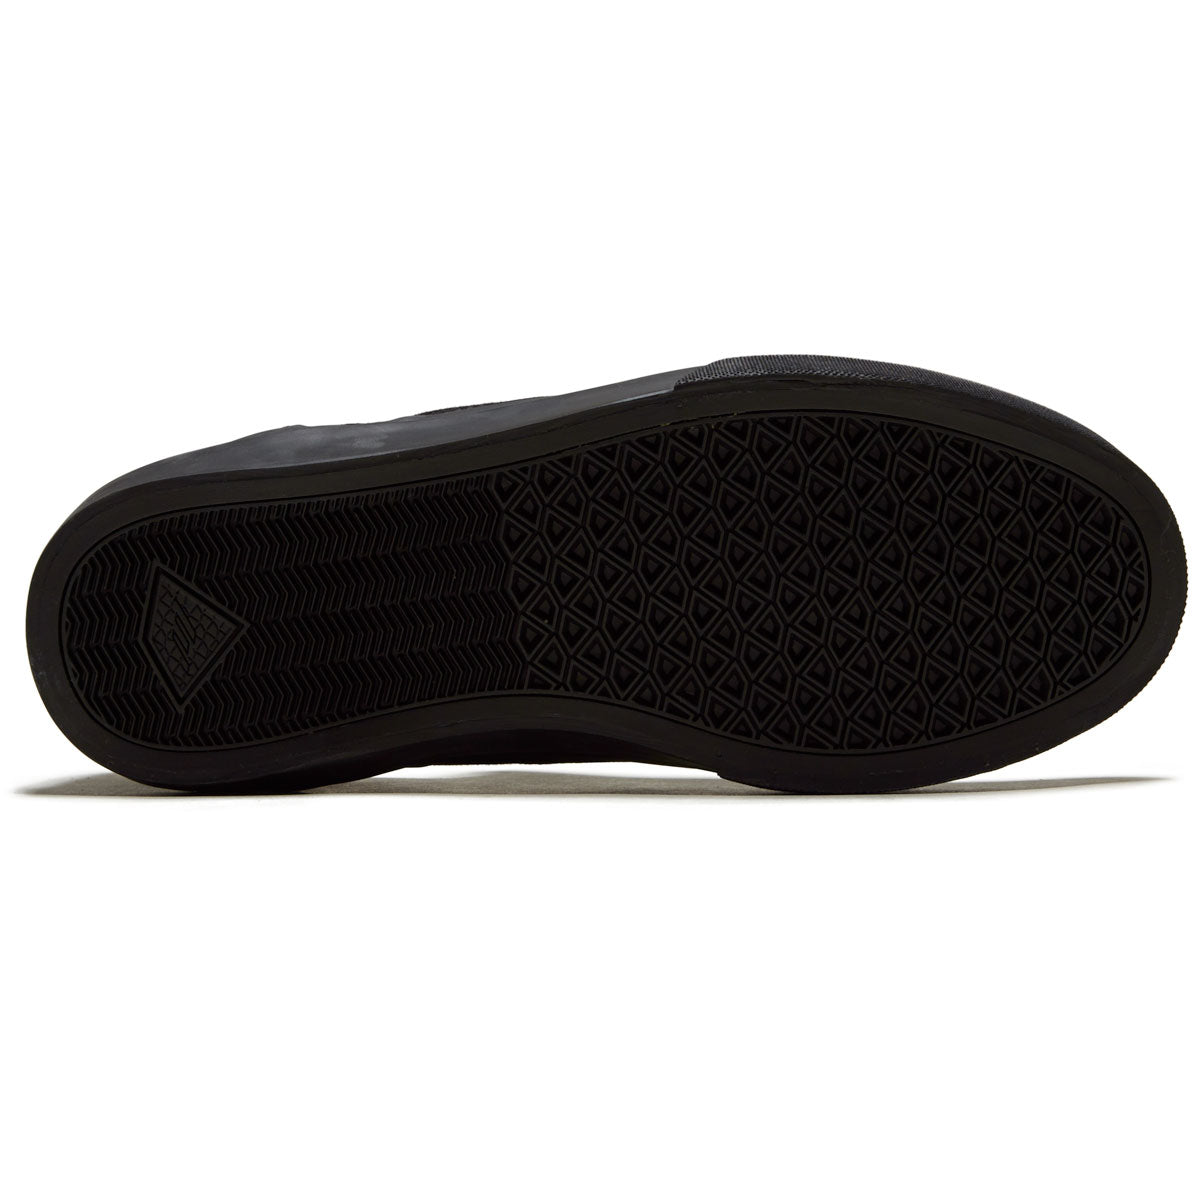 Emerica Wino G6 Slip-on Shoes - Black image 4